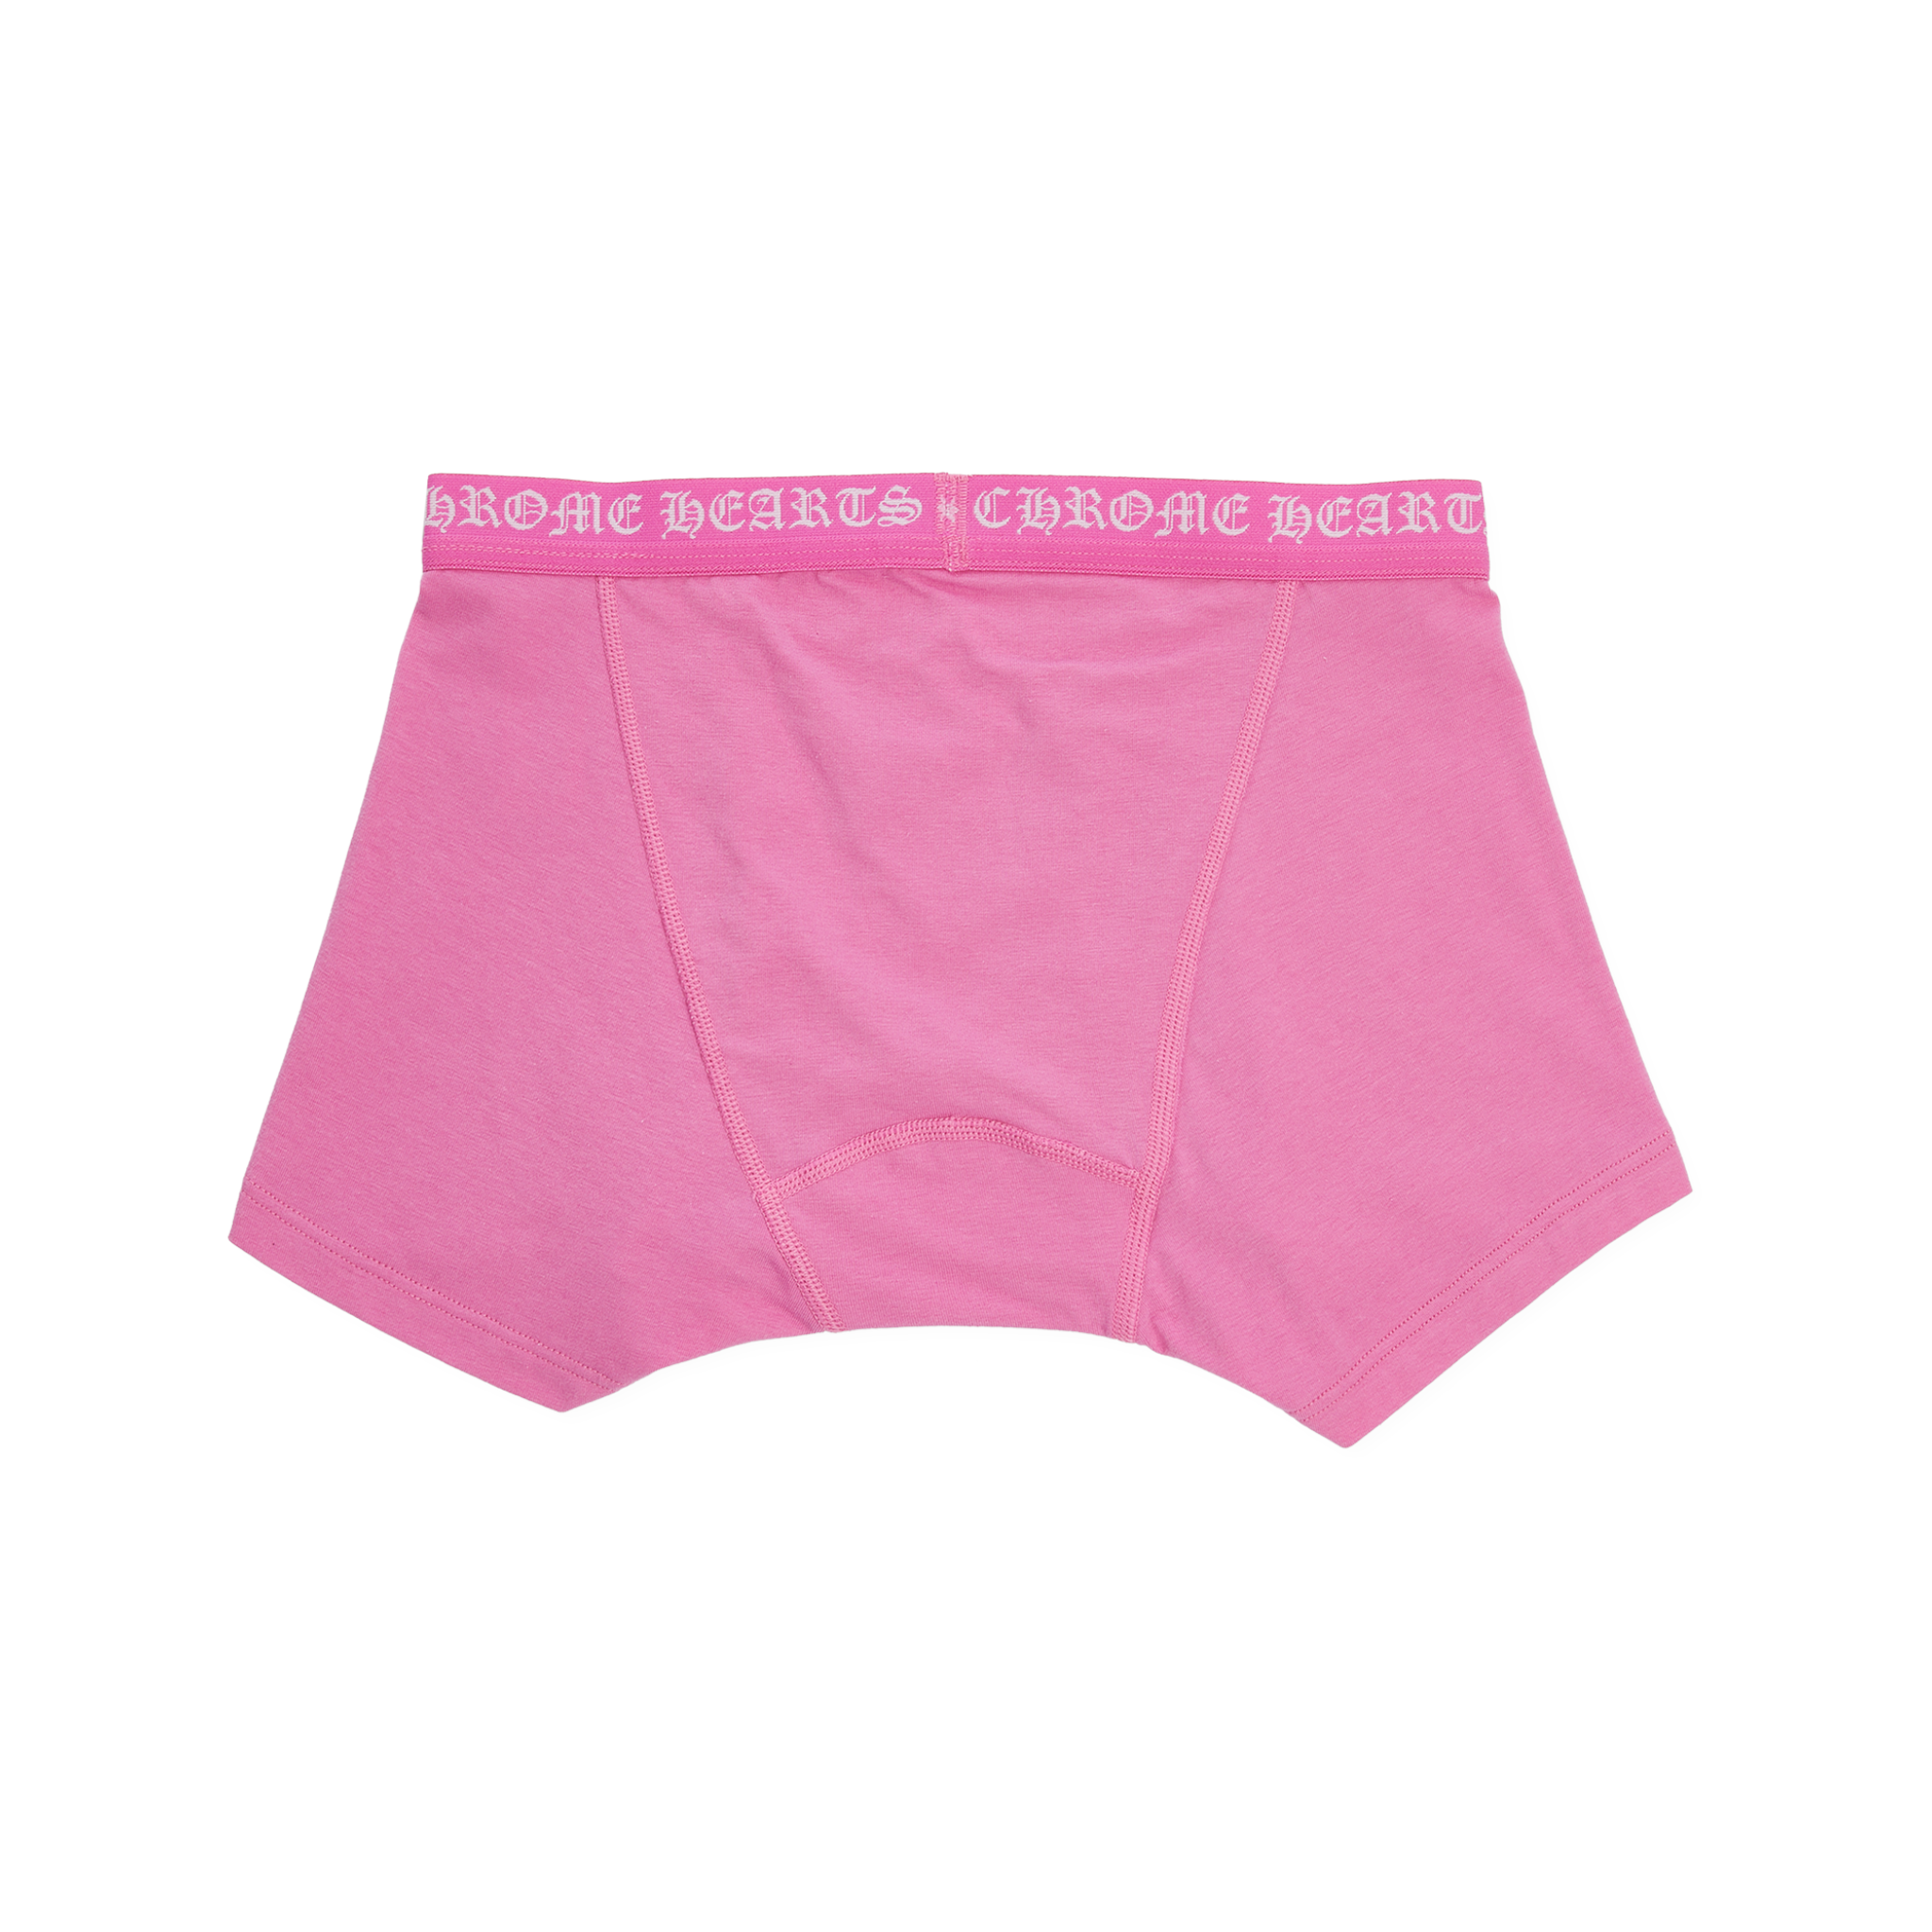 Chrome Hearts Boxer Brief Shorts 'Pink'